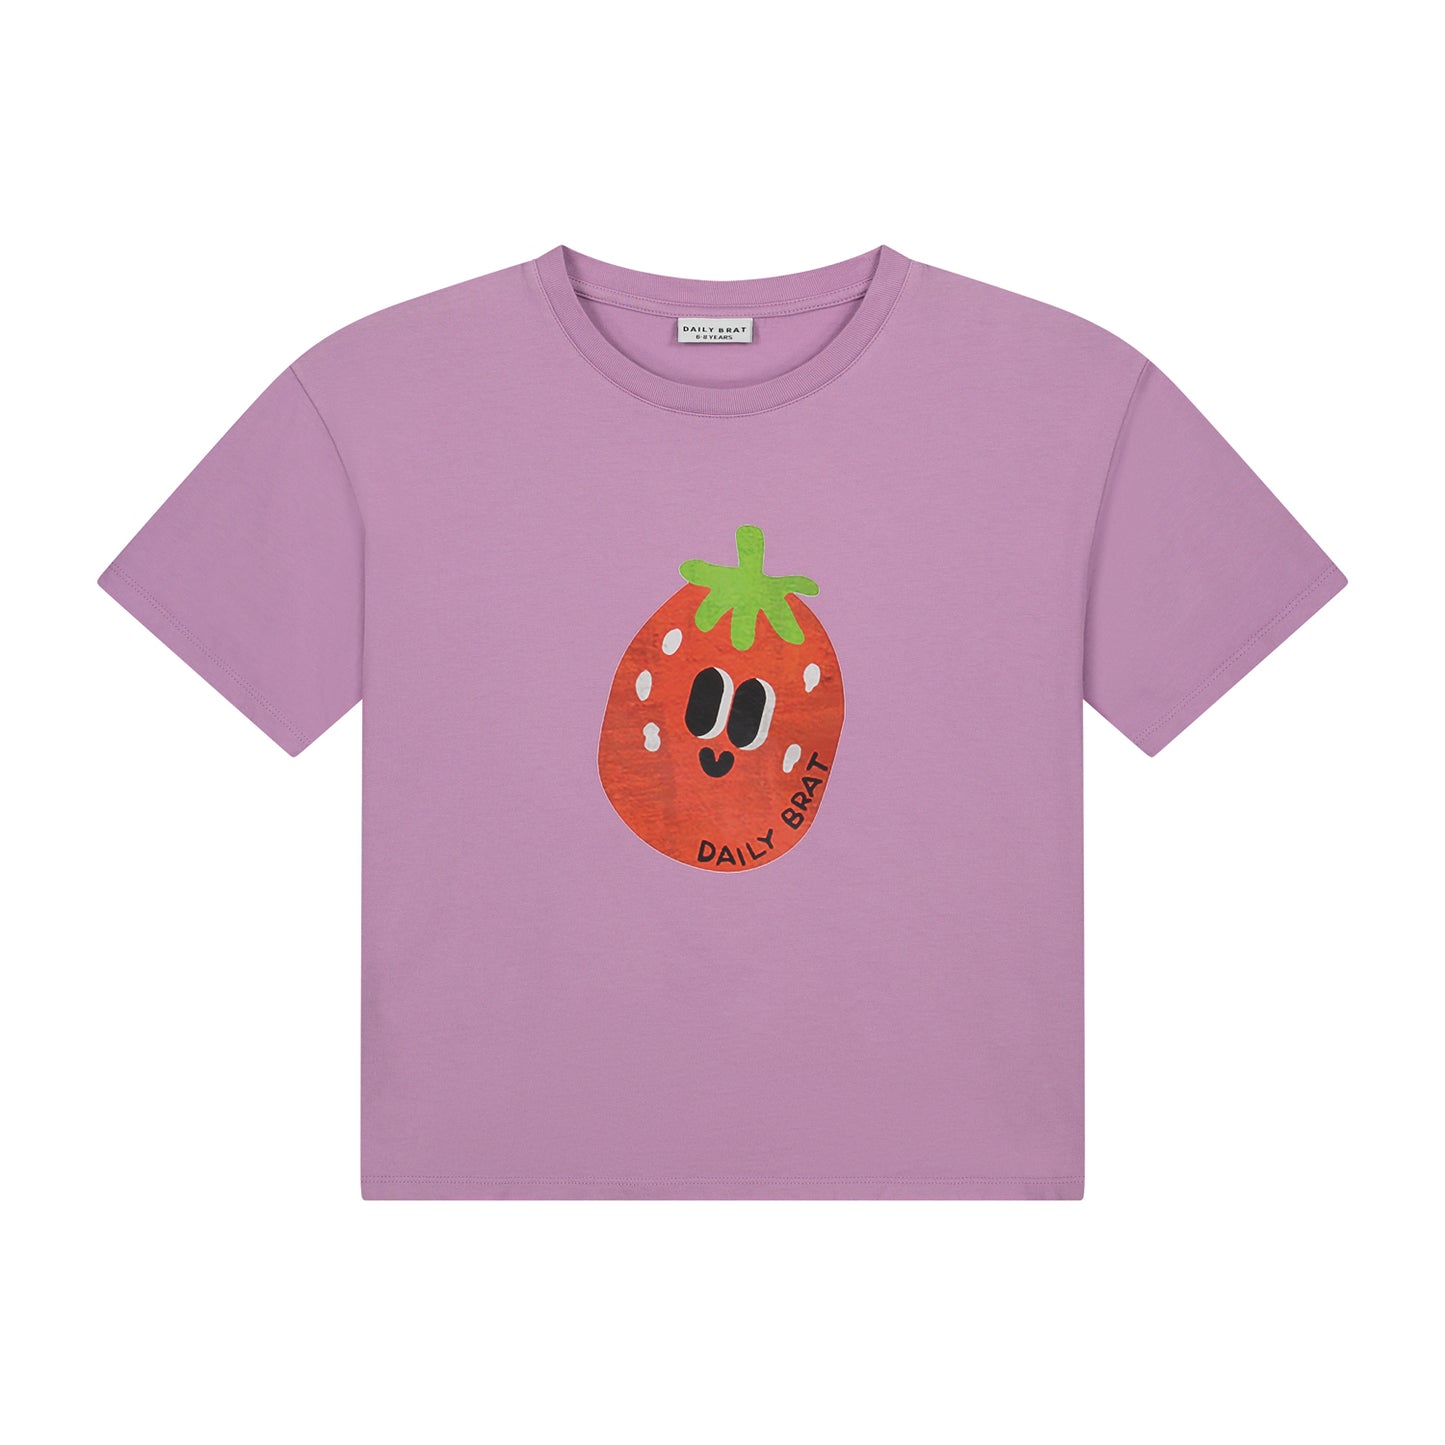 Berry t-shirt lilavender